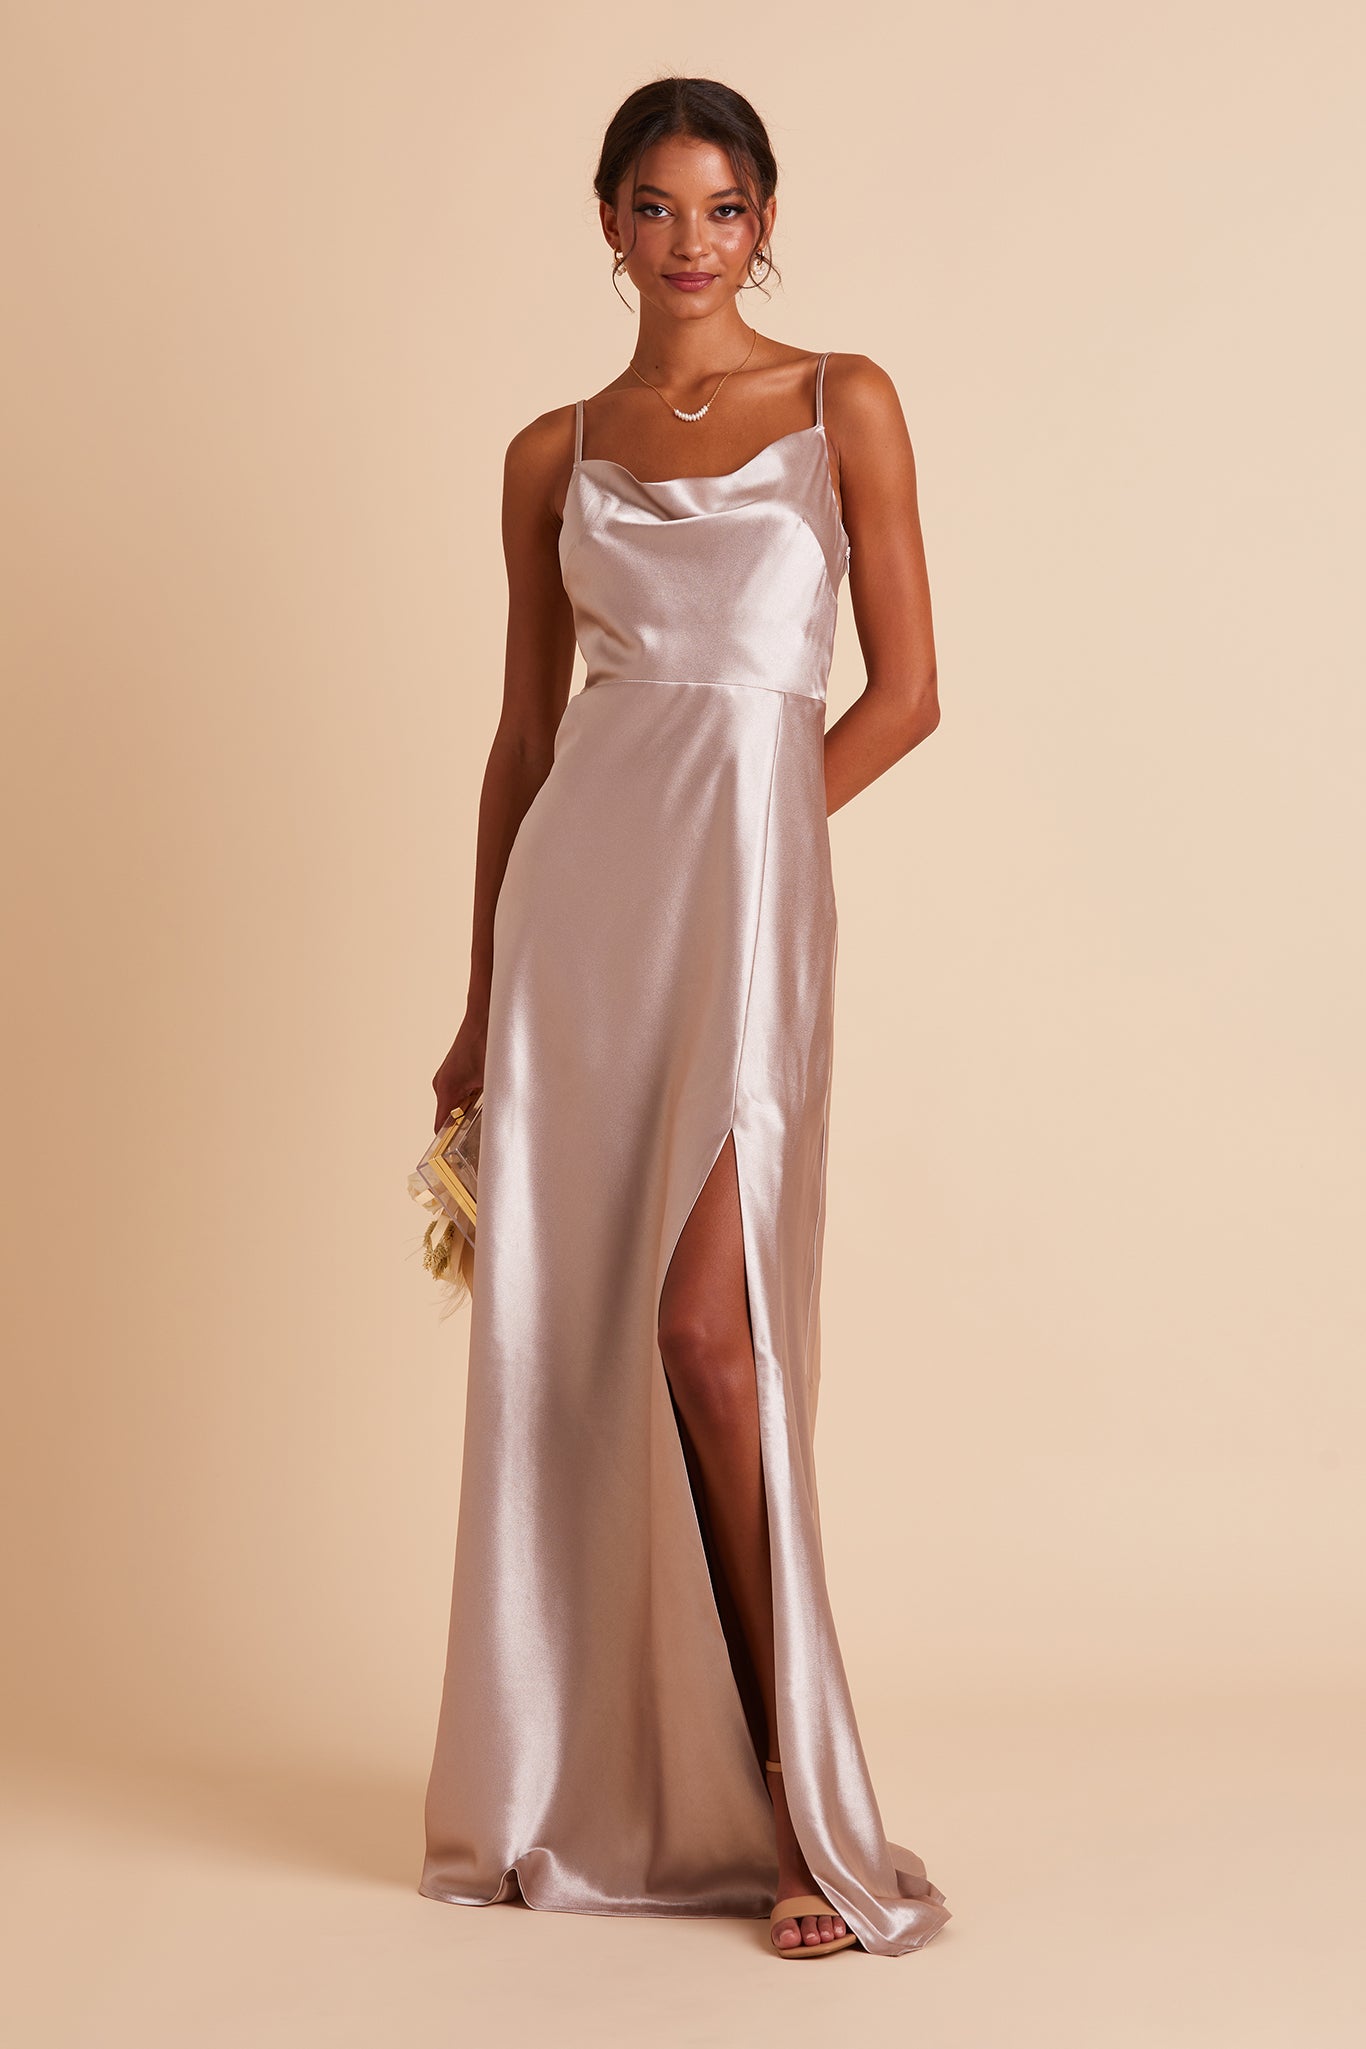 Taupe Lisa Long Satin Dress by Birdy Grey